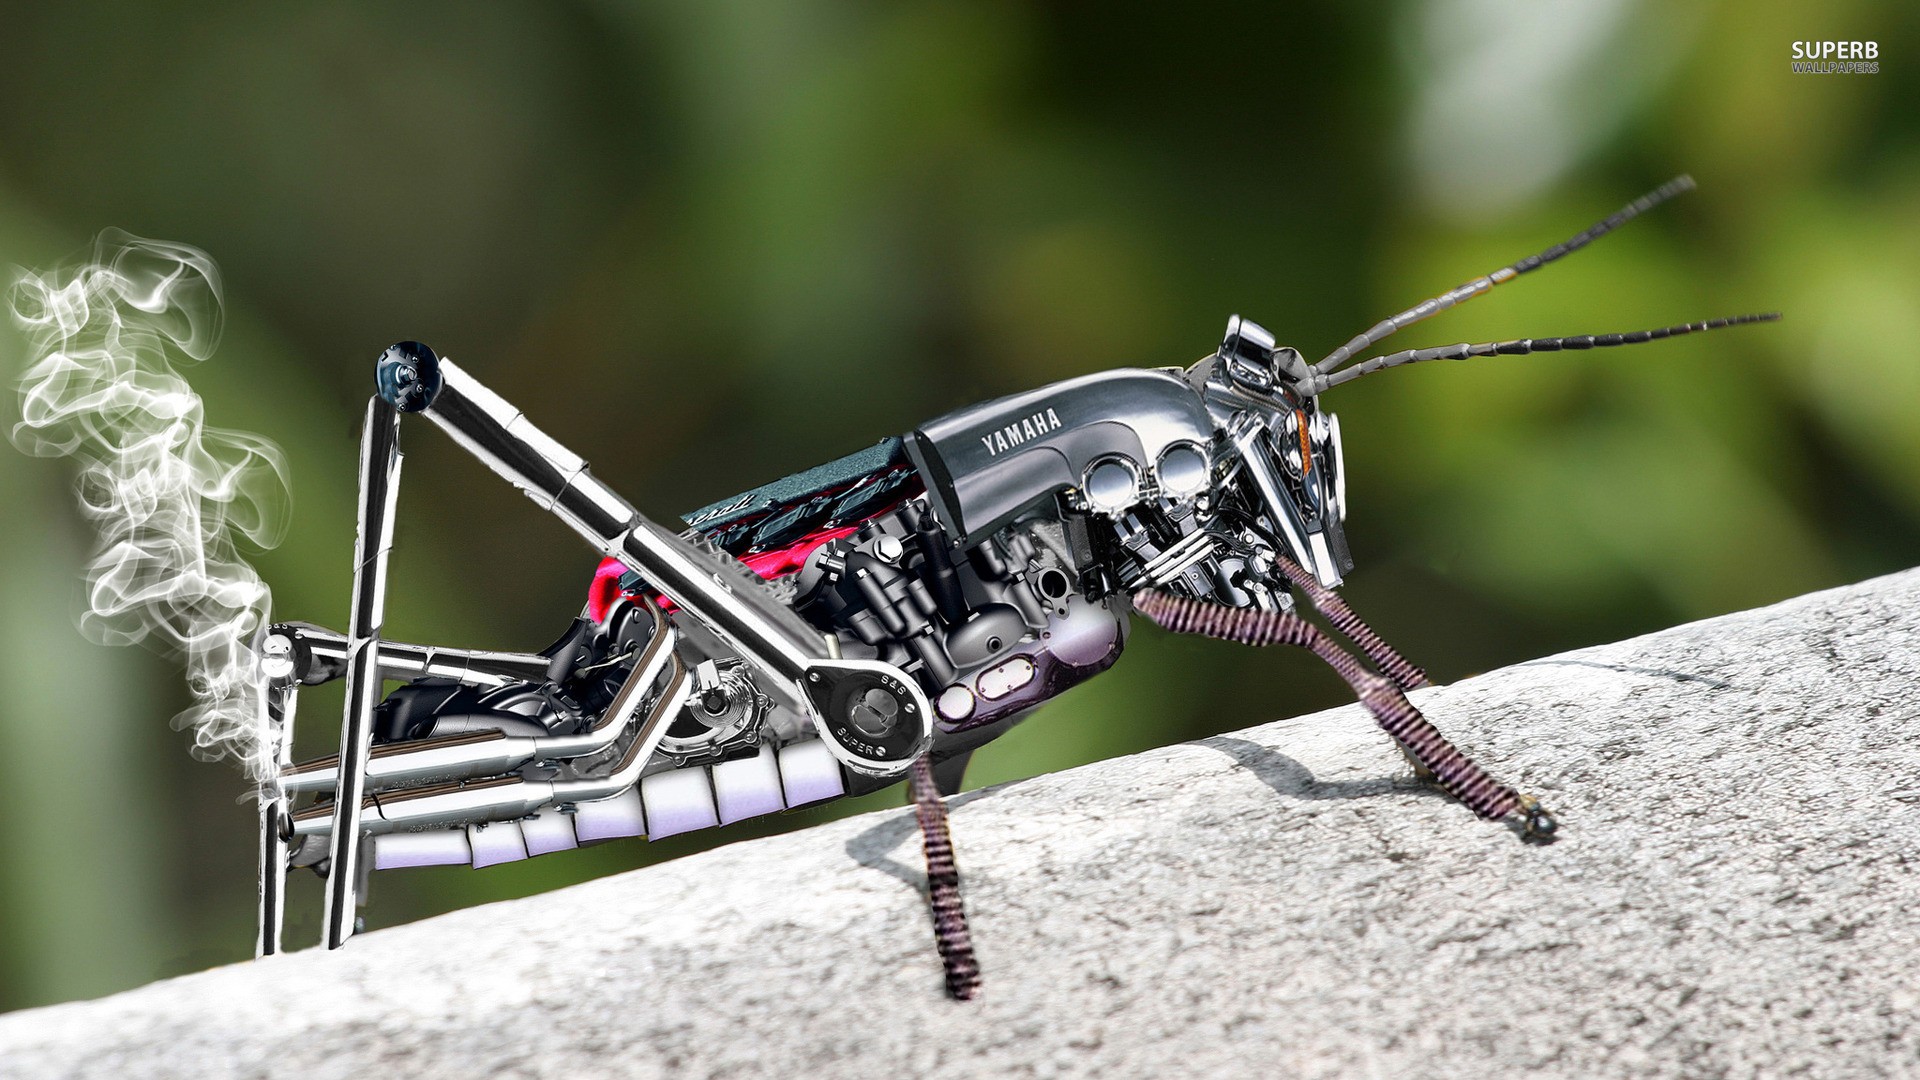 General 1920x1080 grasshopper insect robot digital art Yamaha smoke